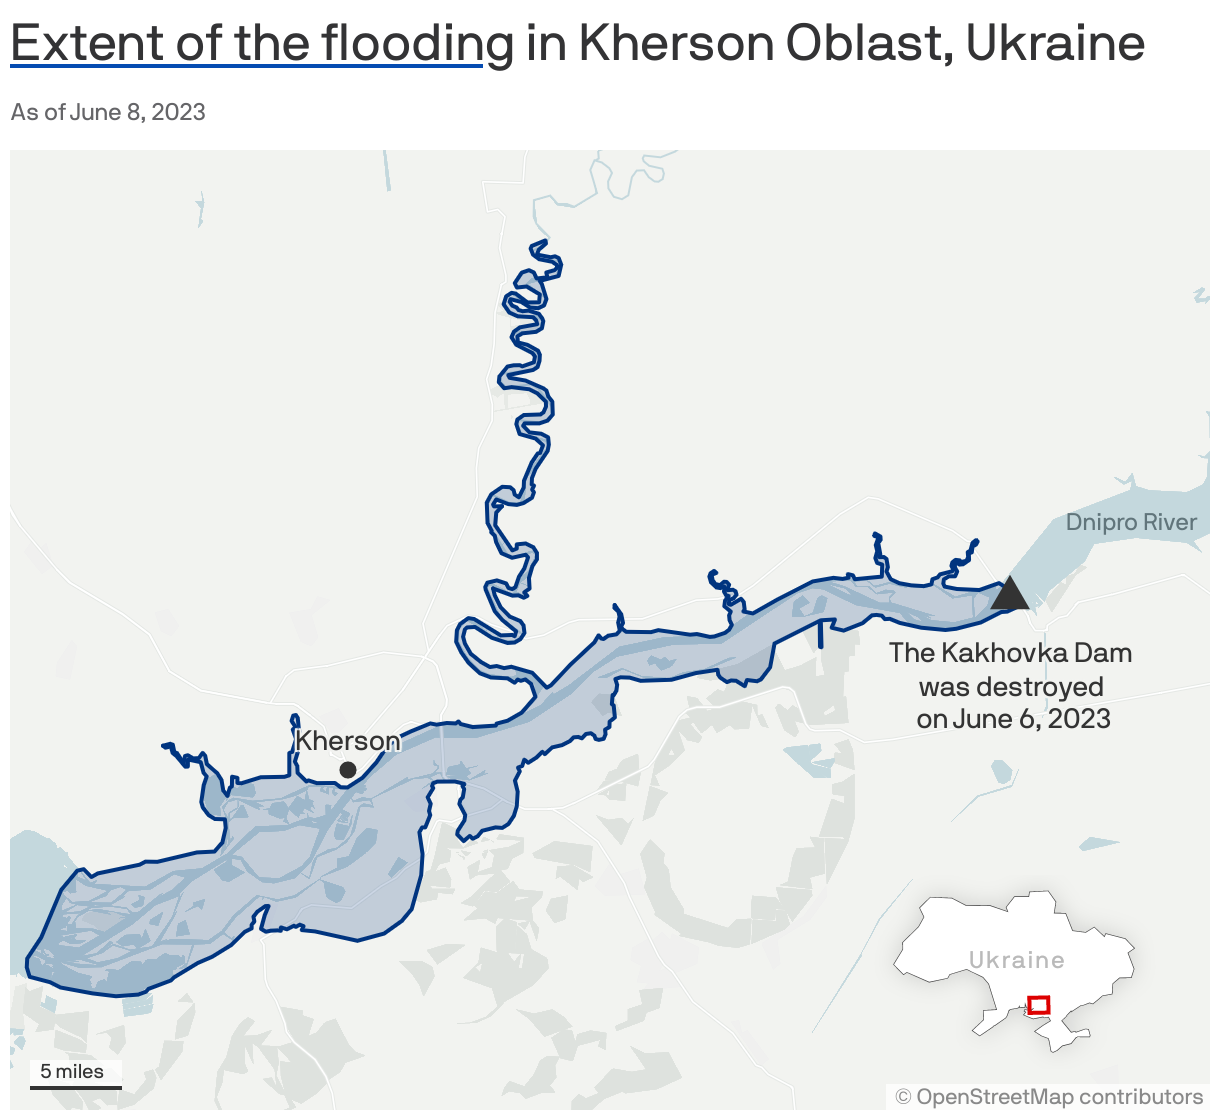 <span style="text-decoration:underline;text-decoration-color:#054cb2;">Extent of the flooding</span> in Kherson Oblast, Ukraine